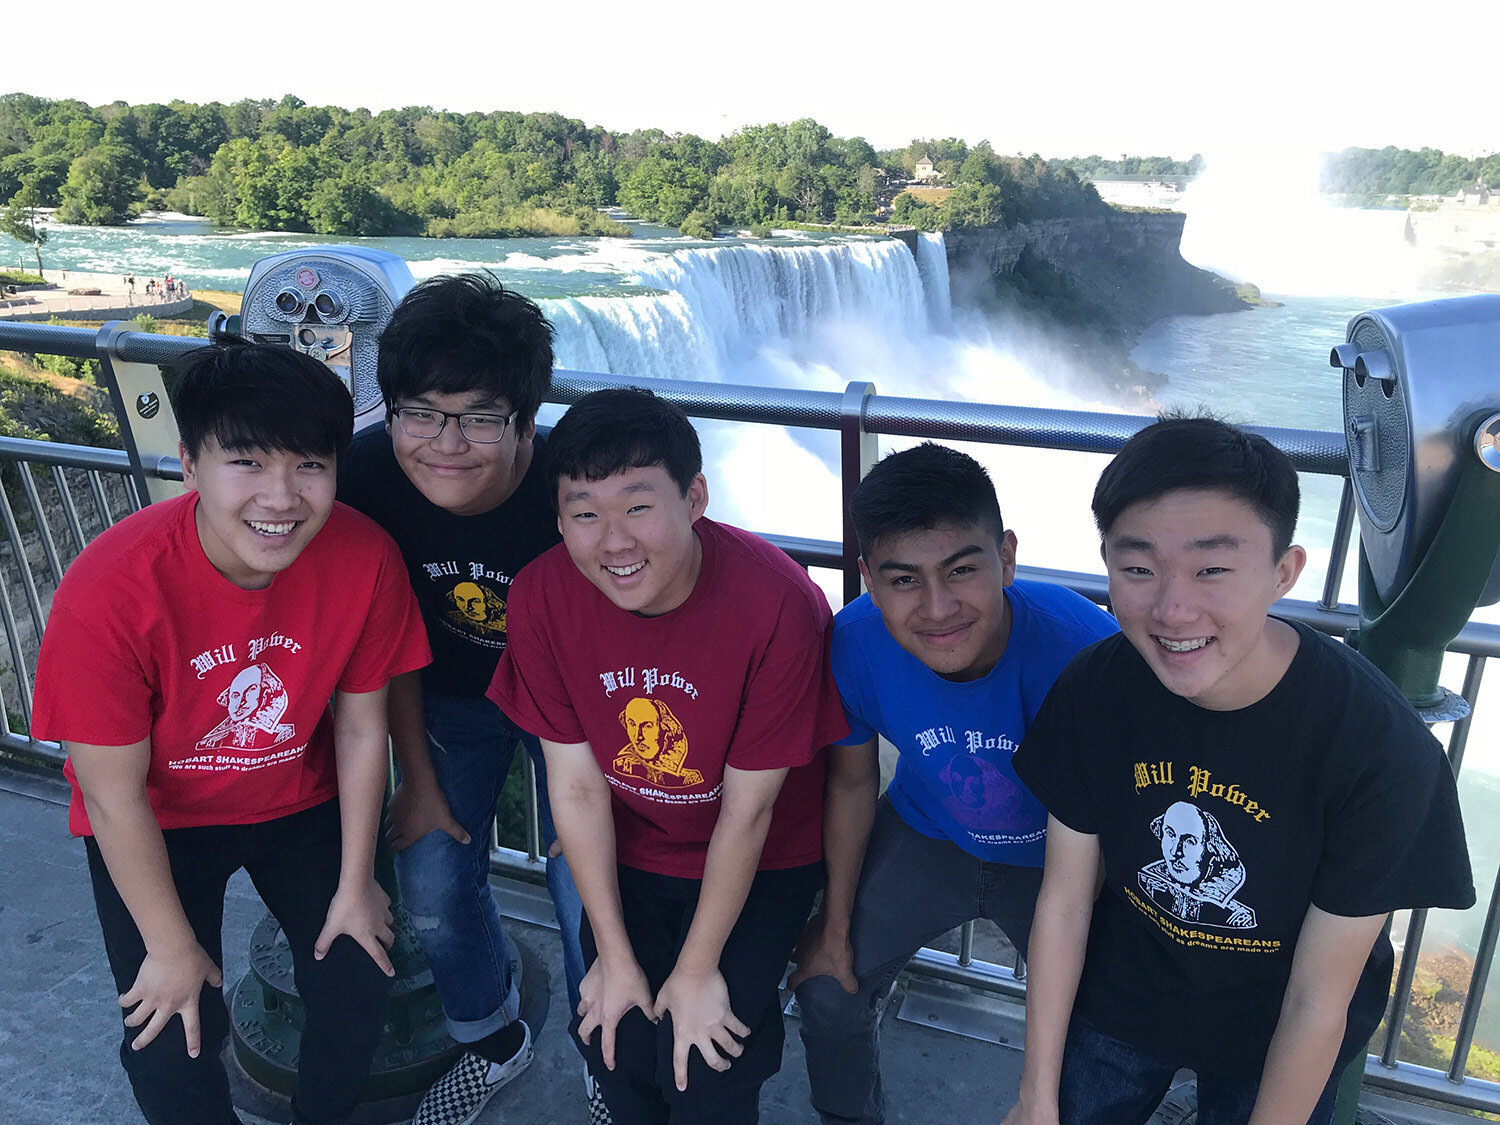  The boys get ready to take on Niagara Falls 